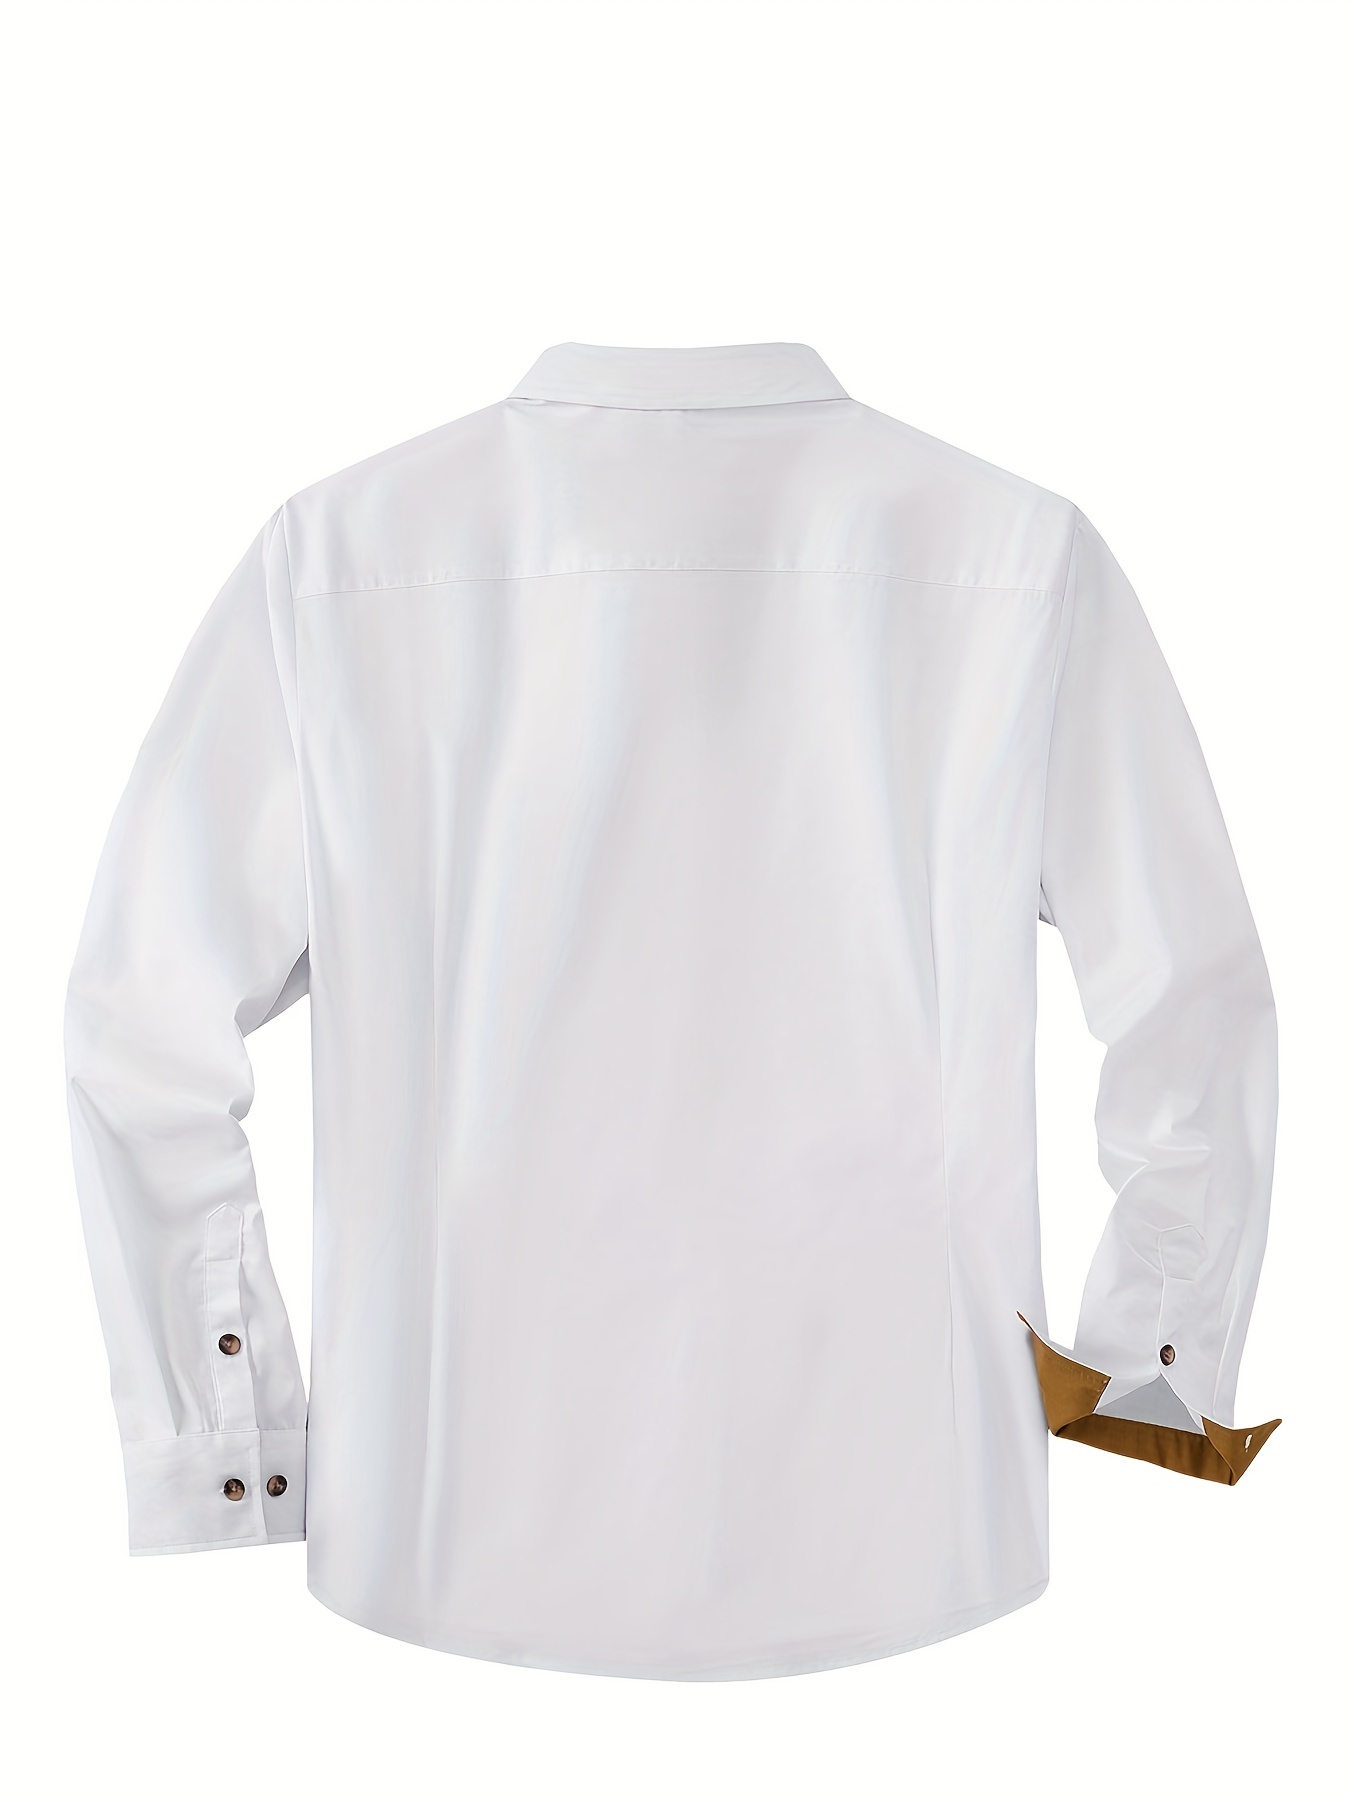 New Mens Casual Formal Shirts Slim Fit Shirt Top Long Sleeve M L XL XXL PS08